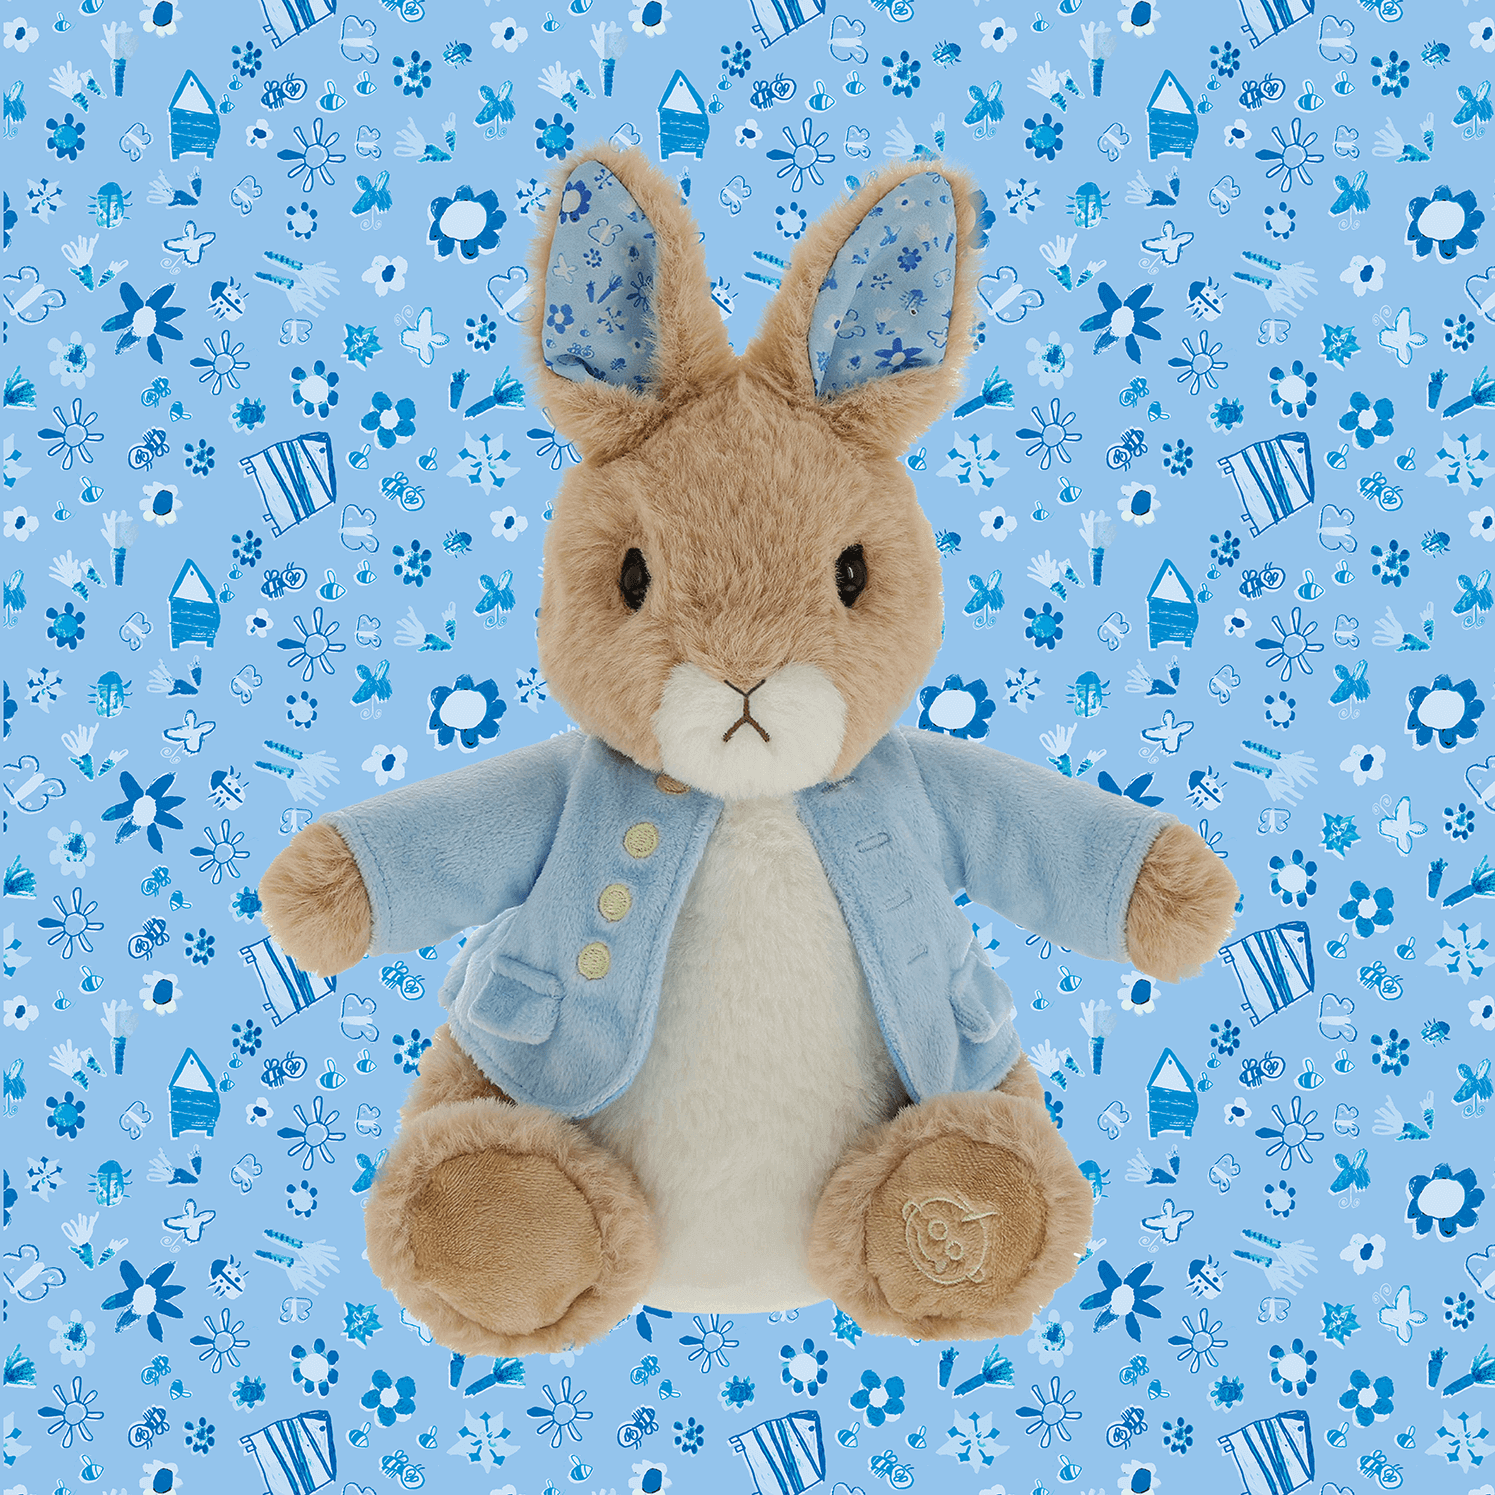 GOSH Charity Arts Peter Rabbit Soft toy blue background